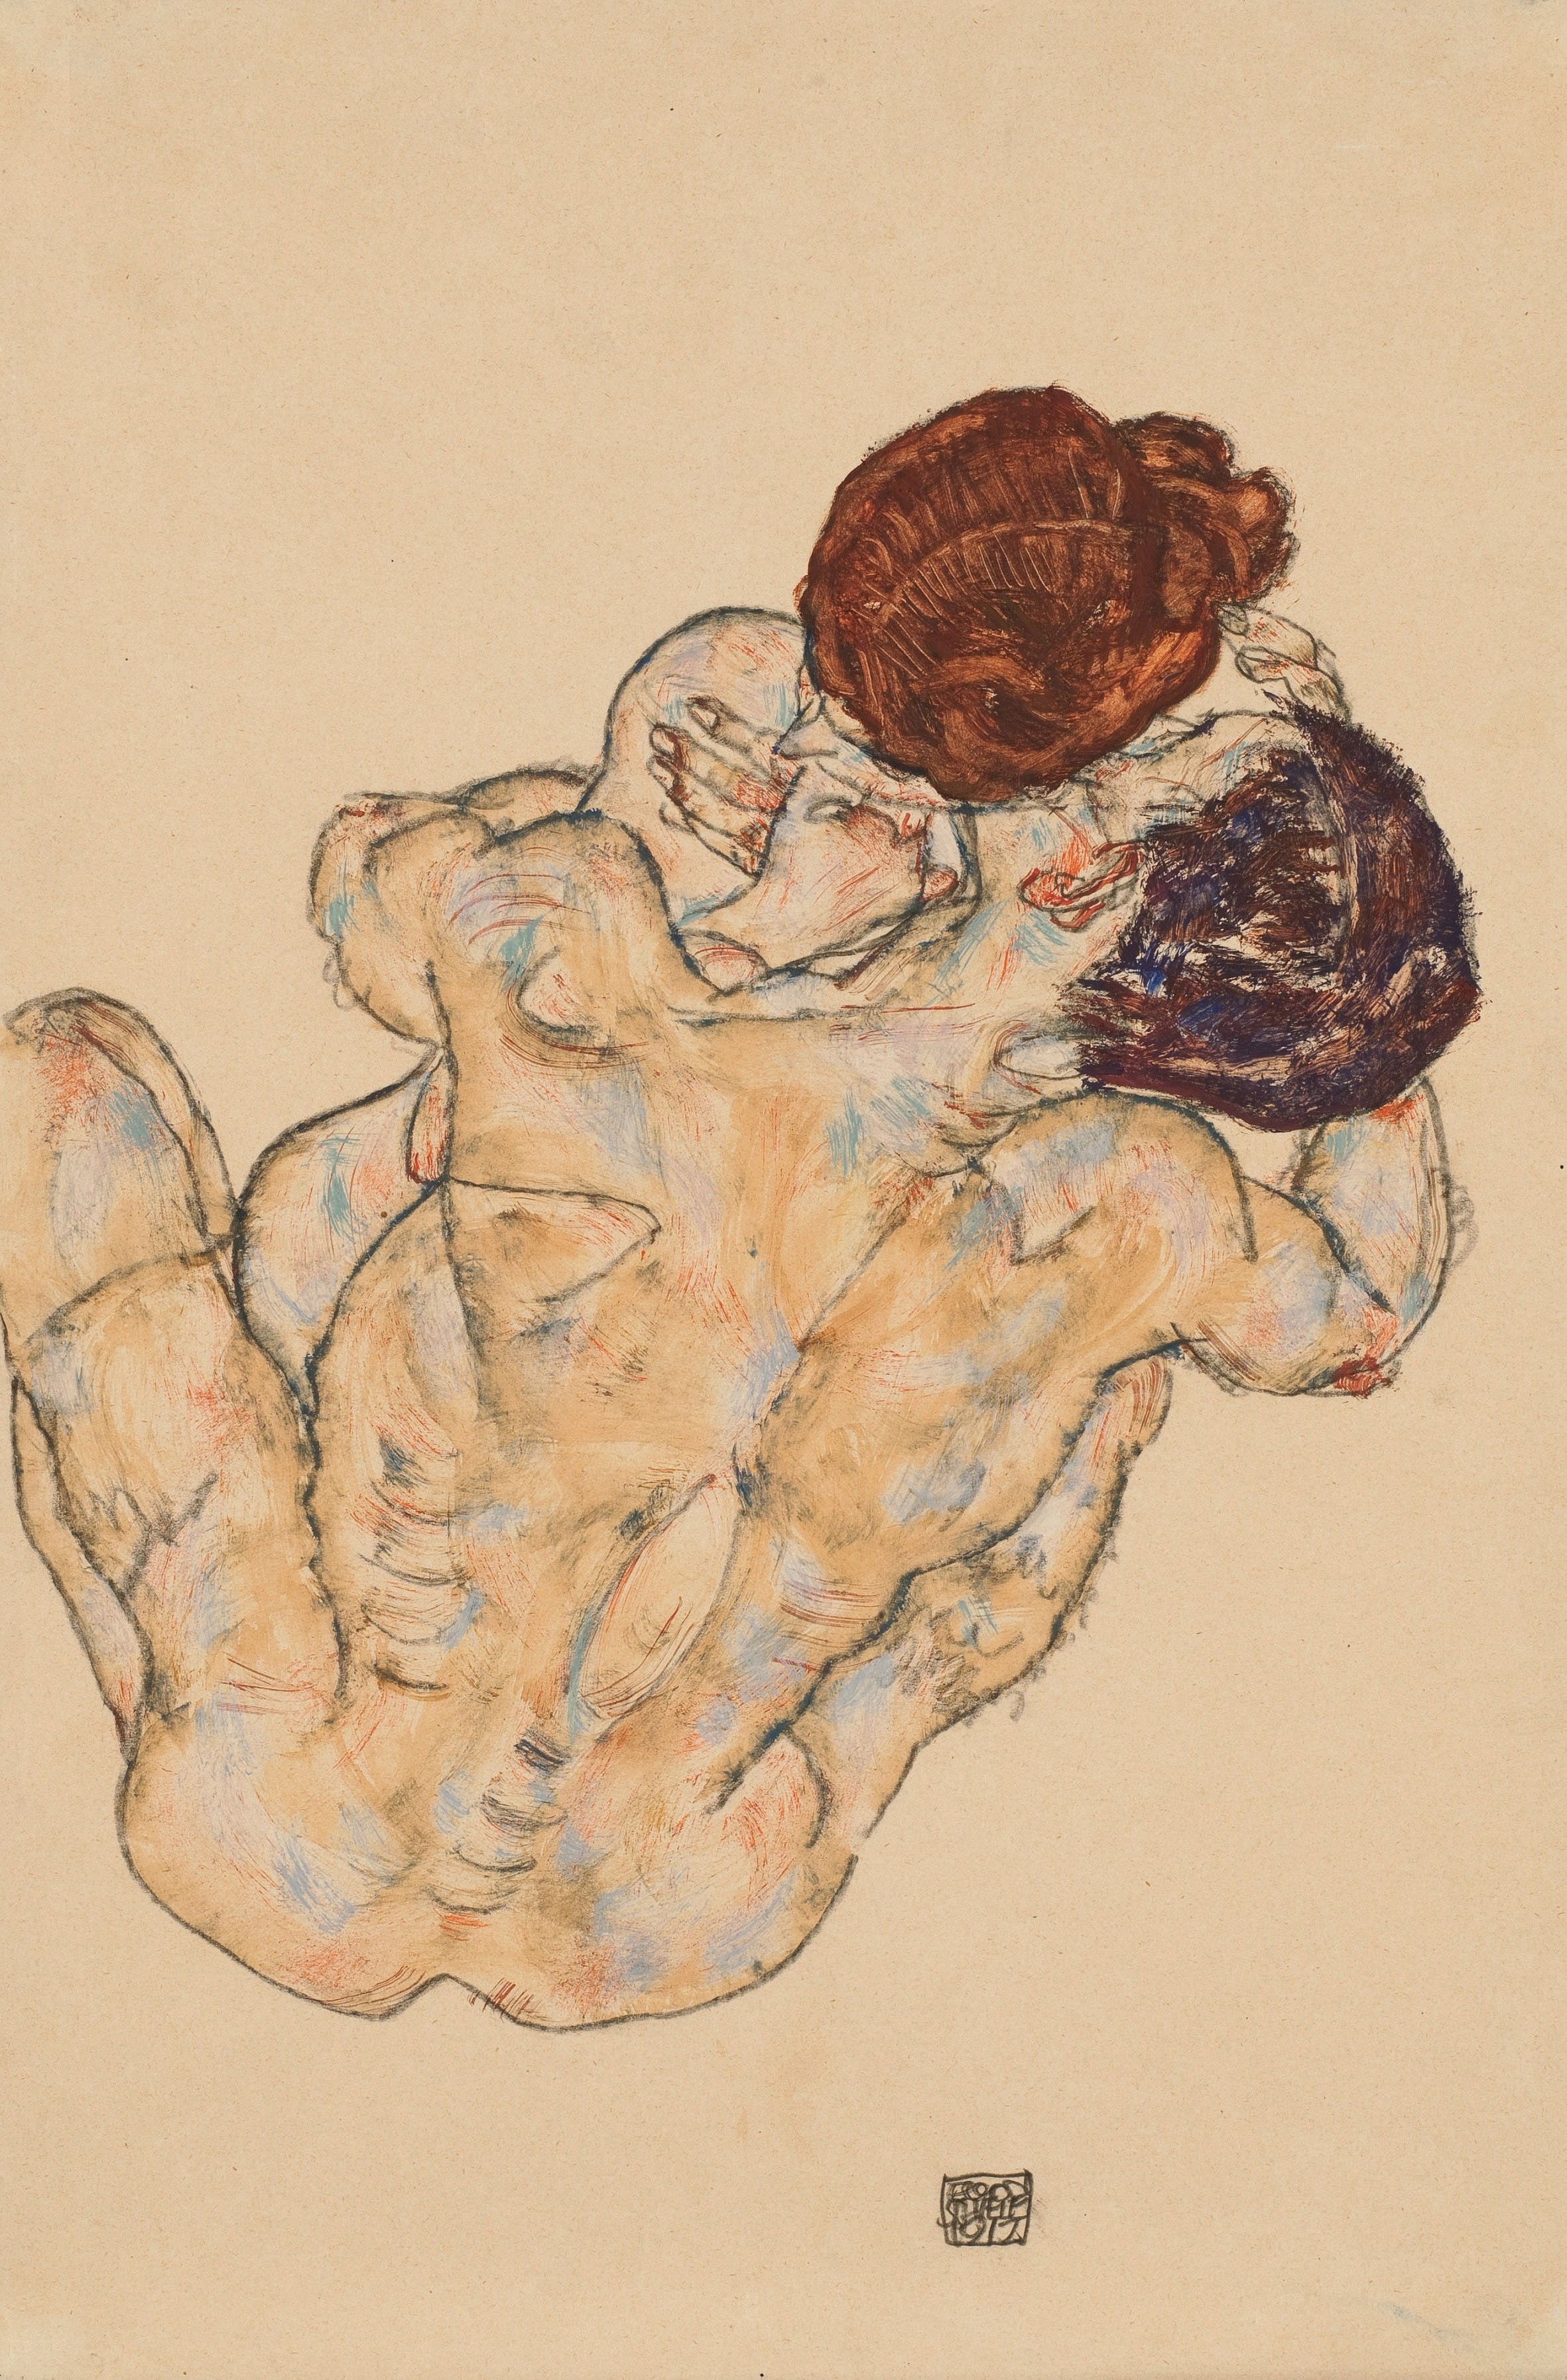 झप्पी by Egon Schiele - १९१७ - ४८.९ X २८.९ सेमी 